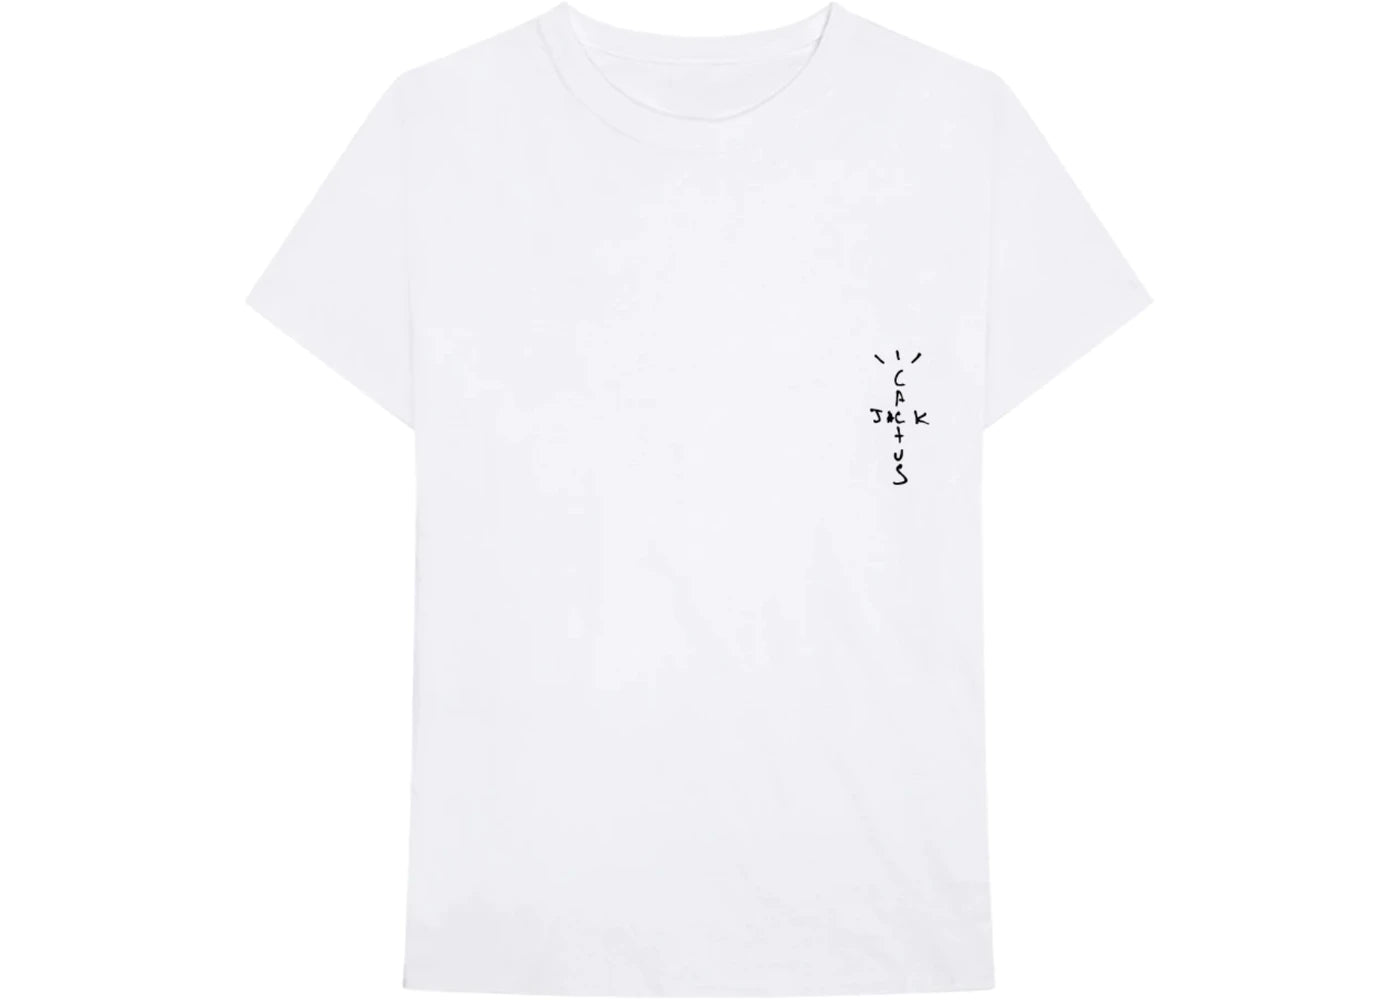 Travis Scott Cactus Jack Basic T-Shirt White